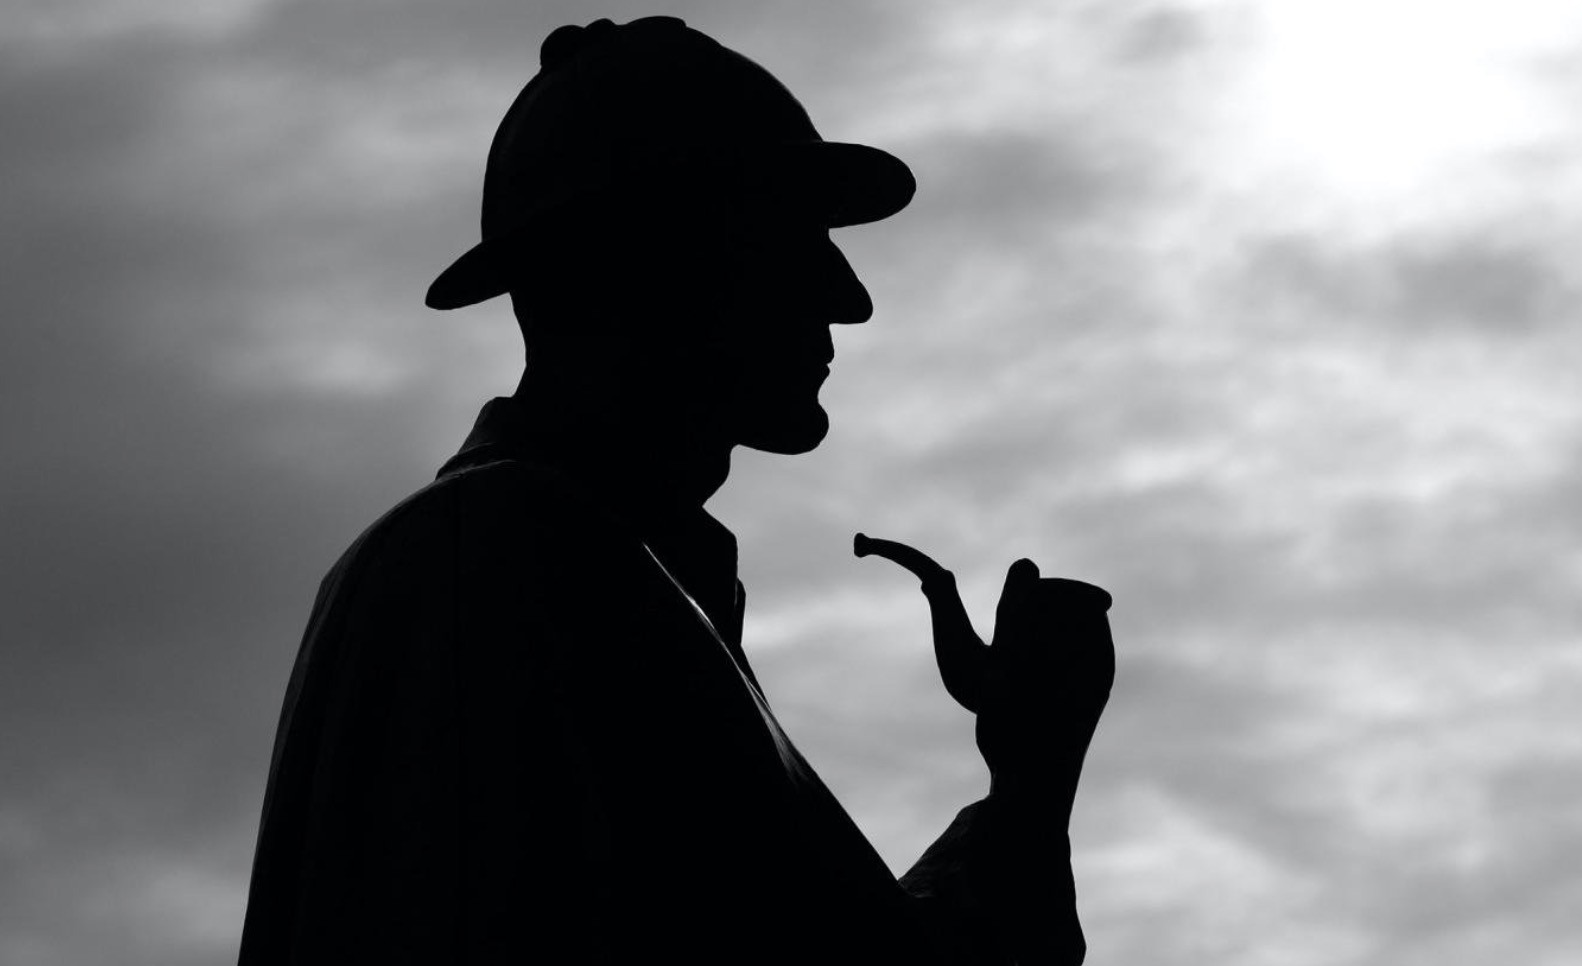 The silhouette of Arthur Conan Doyleu2019s fictional character Sherlock Holmes.